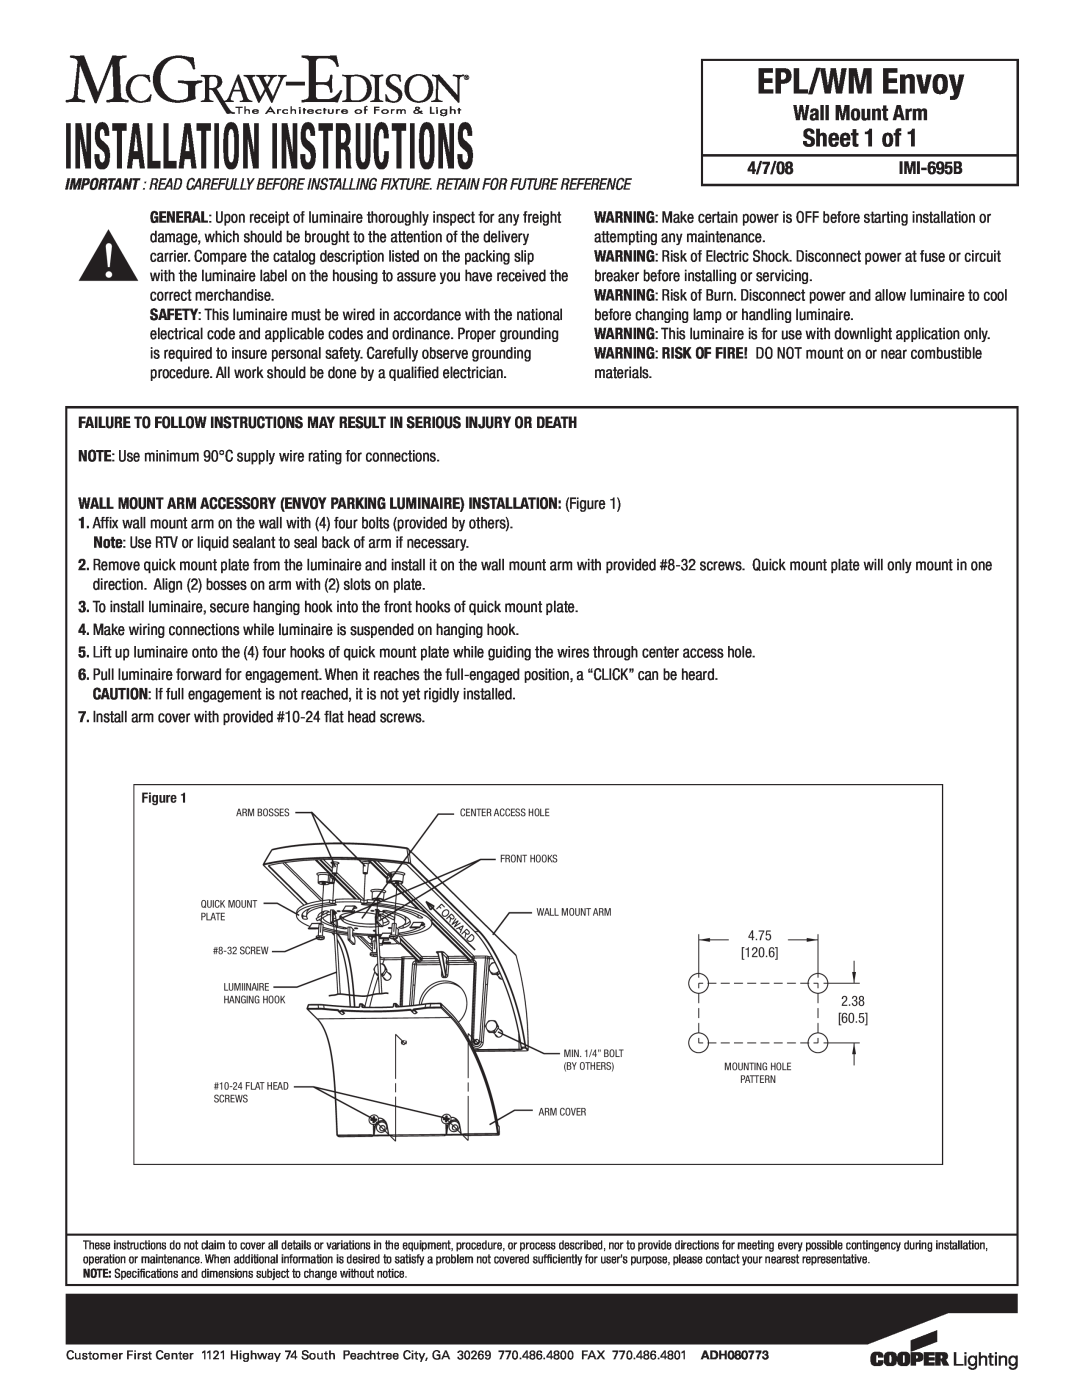 Cooper Lighting IMI-695B installation instructions Installation Instructions, EPL/WM Envoy, Sheet 1 of, Wall Mount Arm 